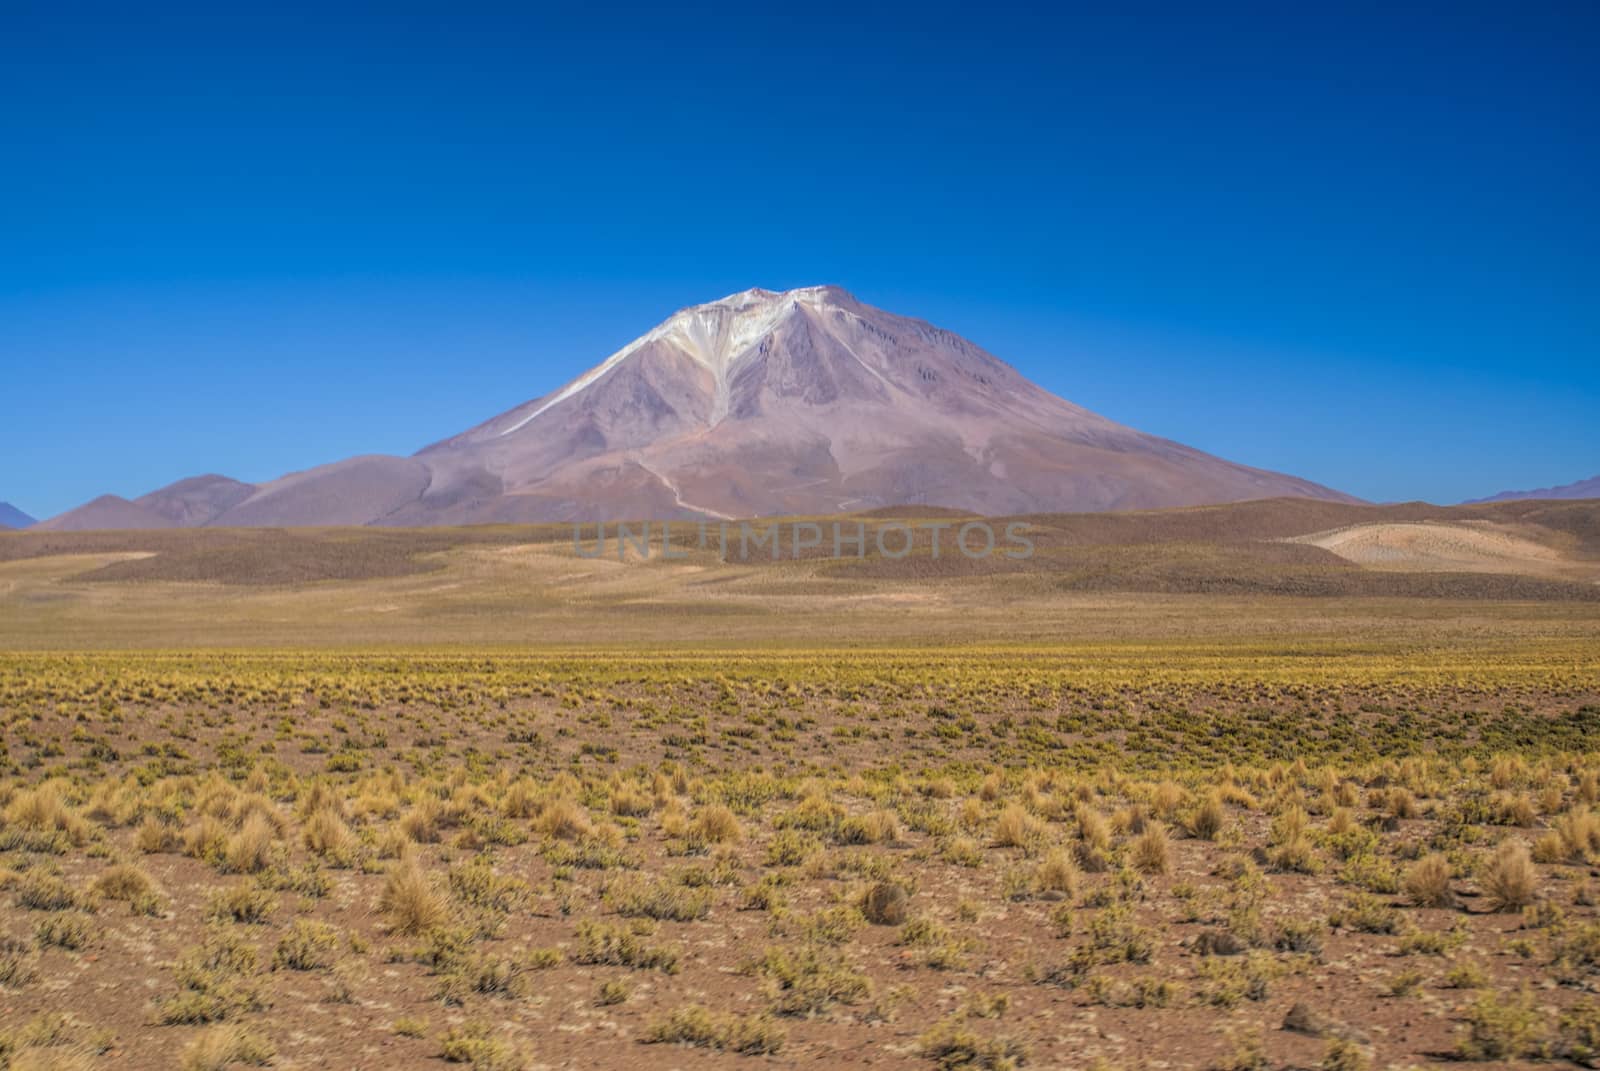 Scenic volcano near salt planes Salar de Uyuni in bolivian desert